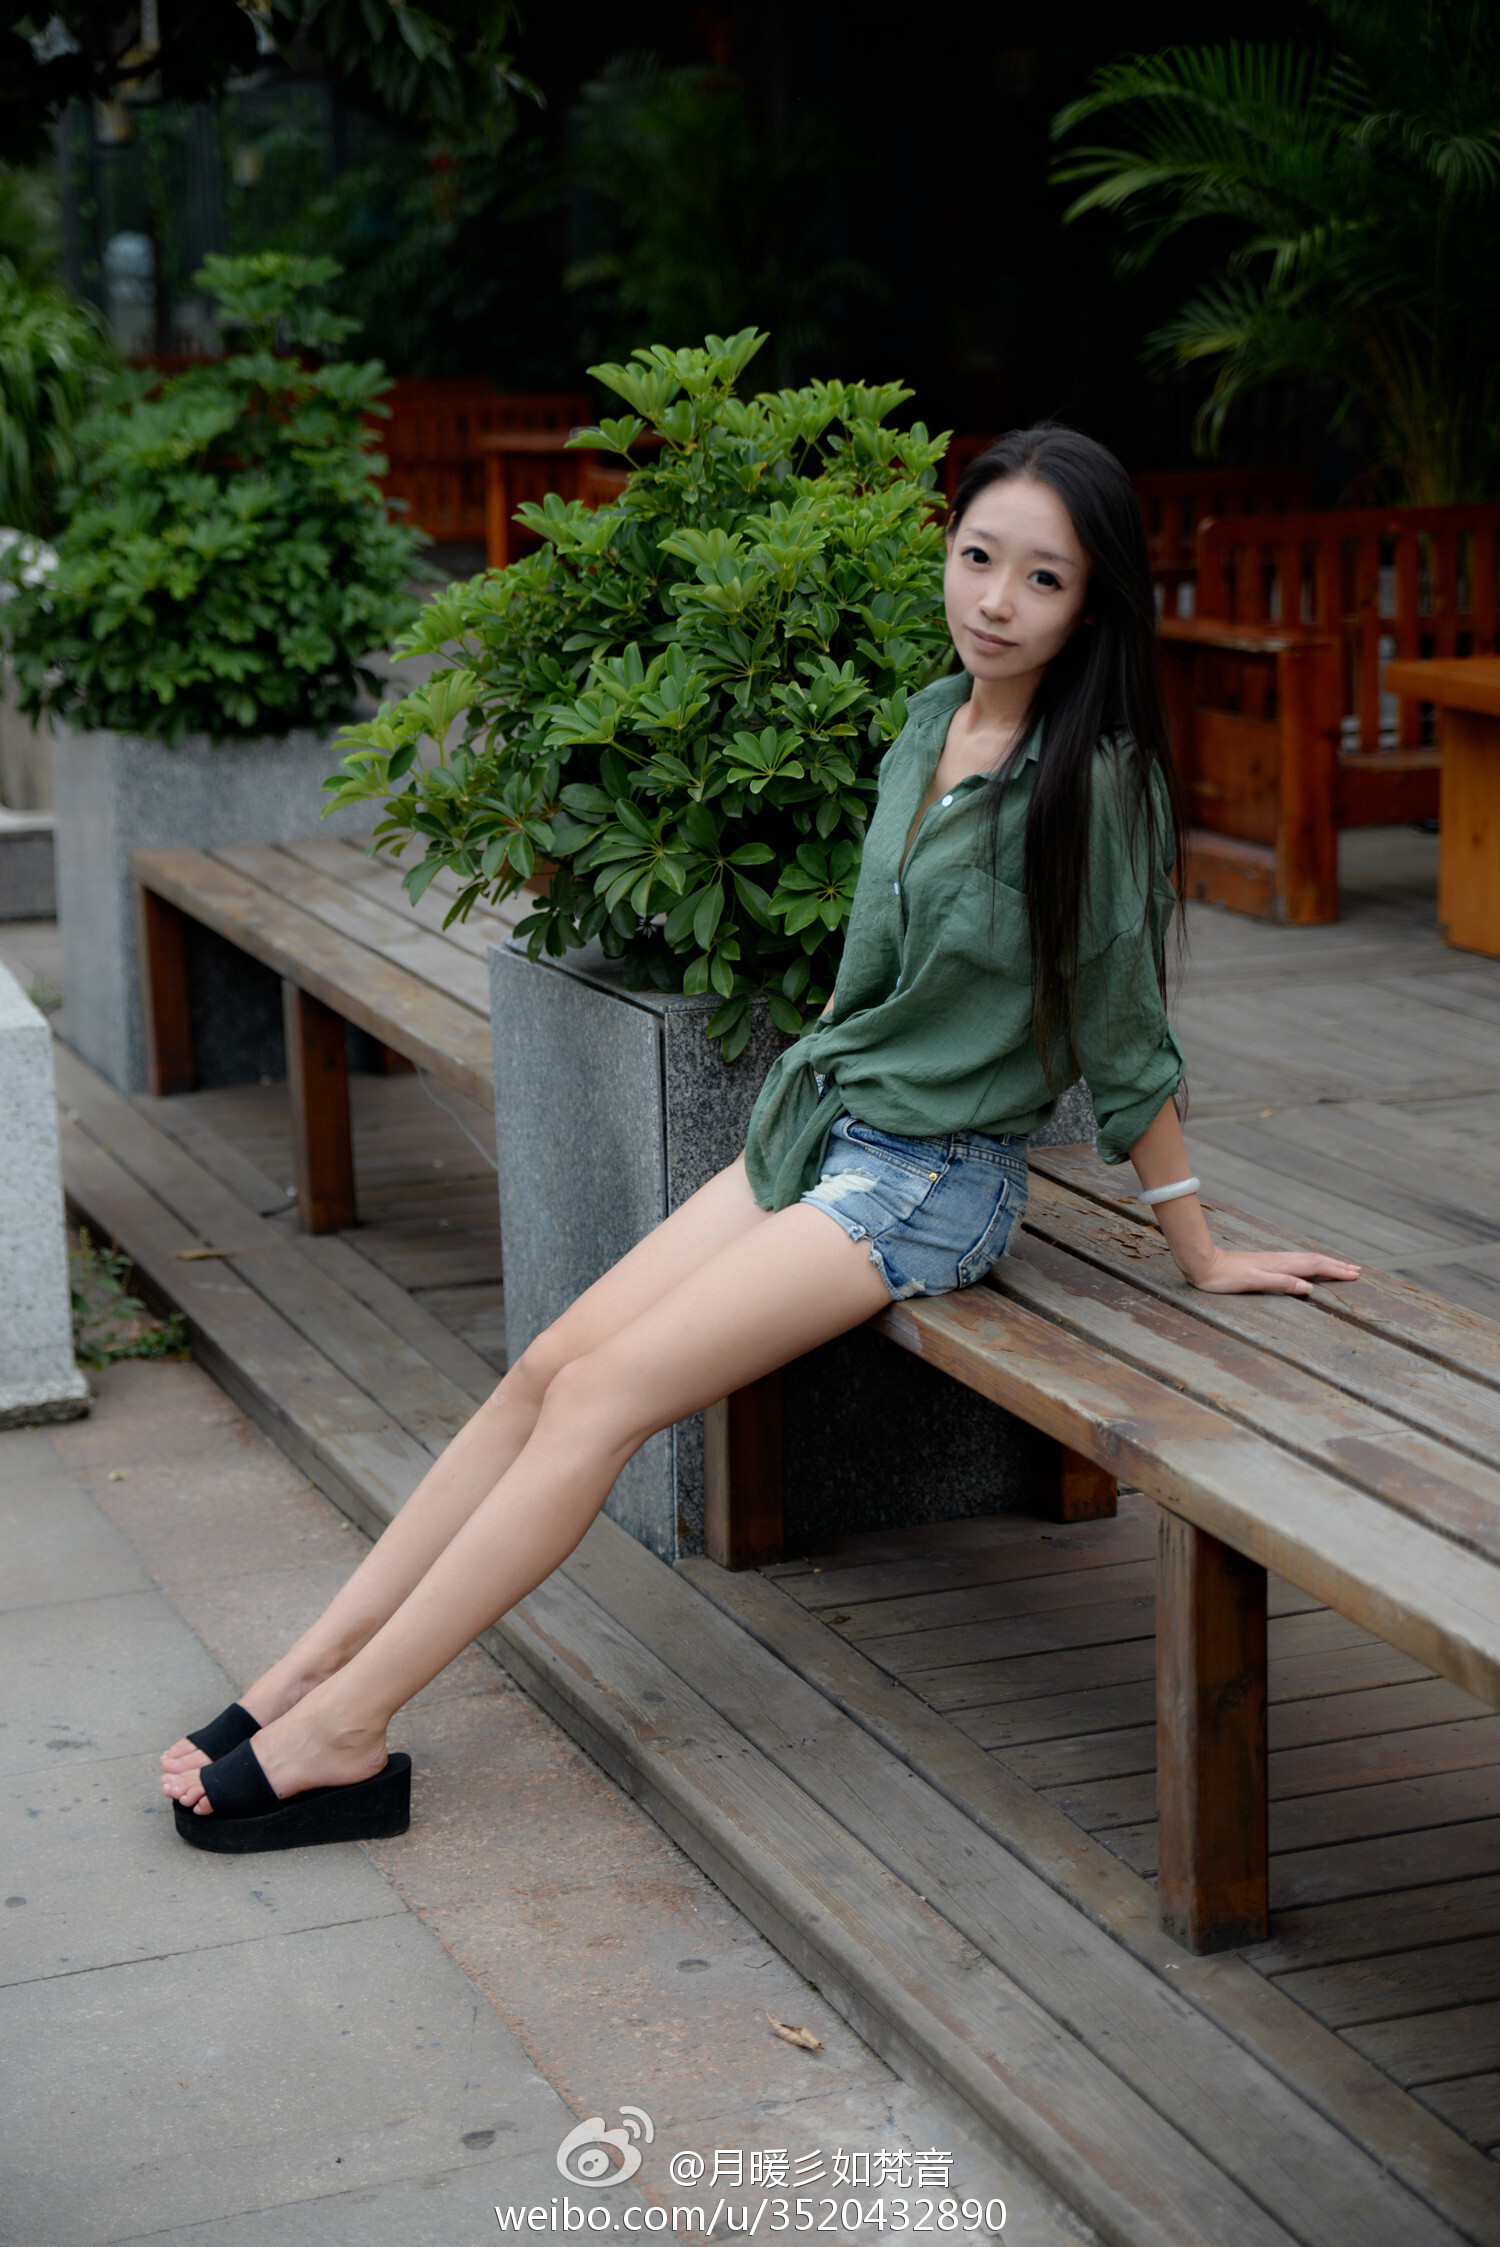 Micro blog goddess yuenuan's photo of black silk legs